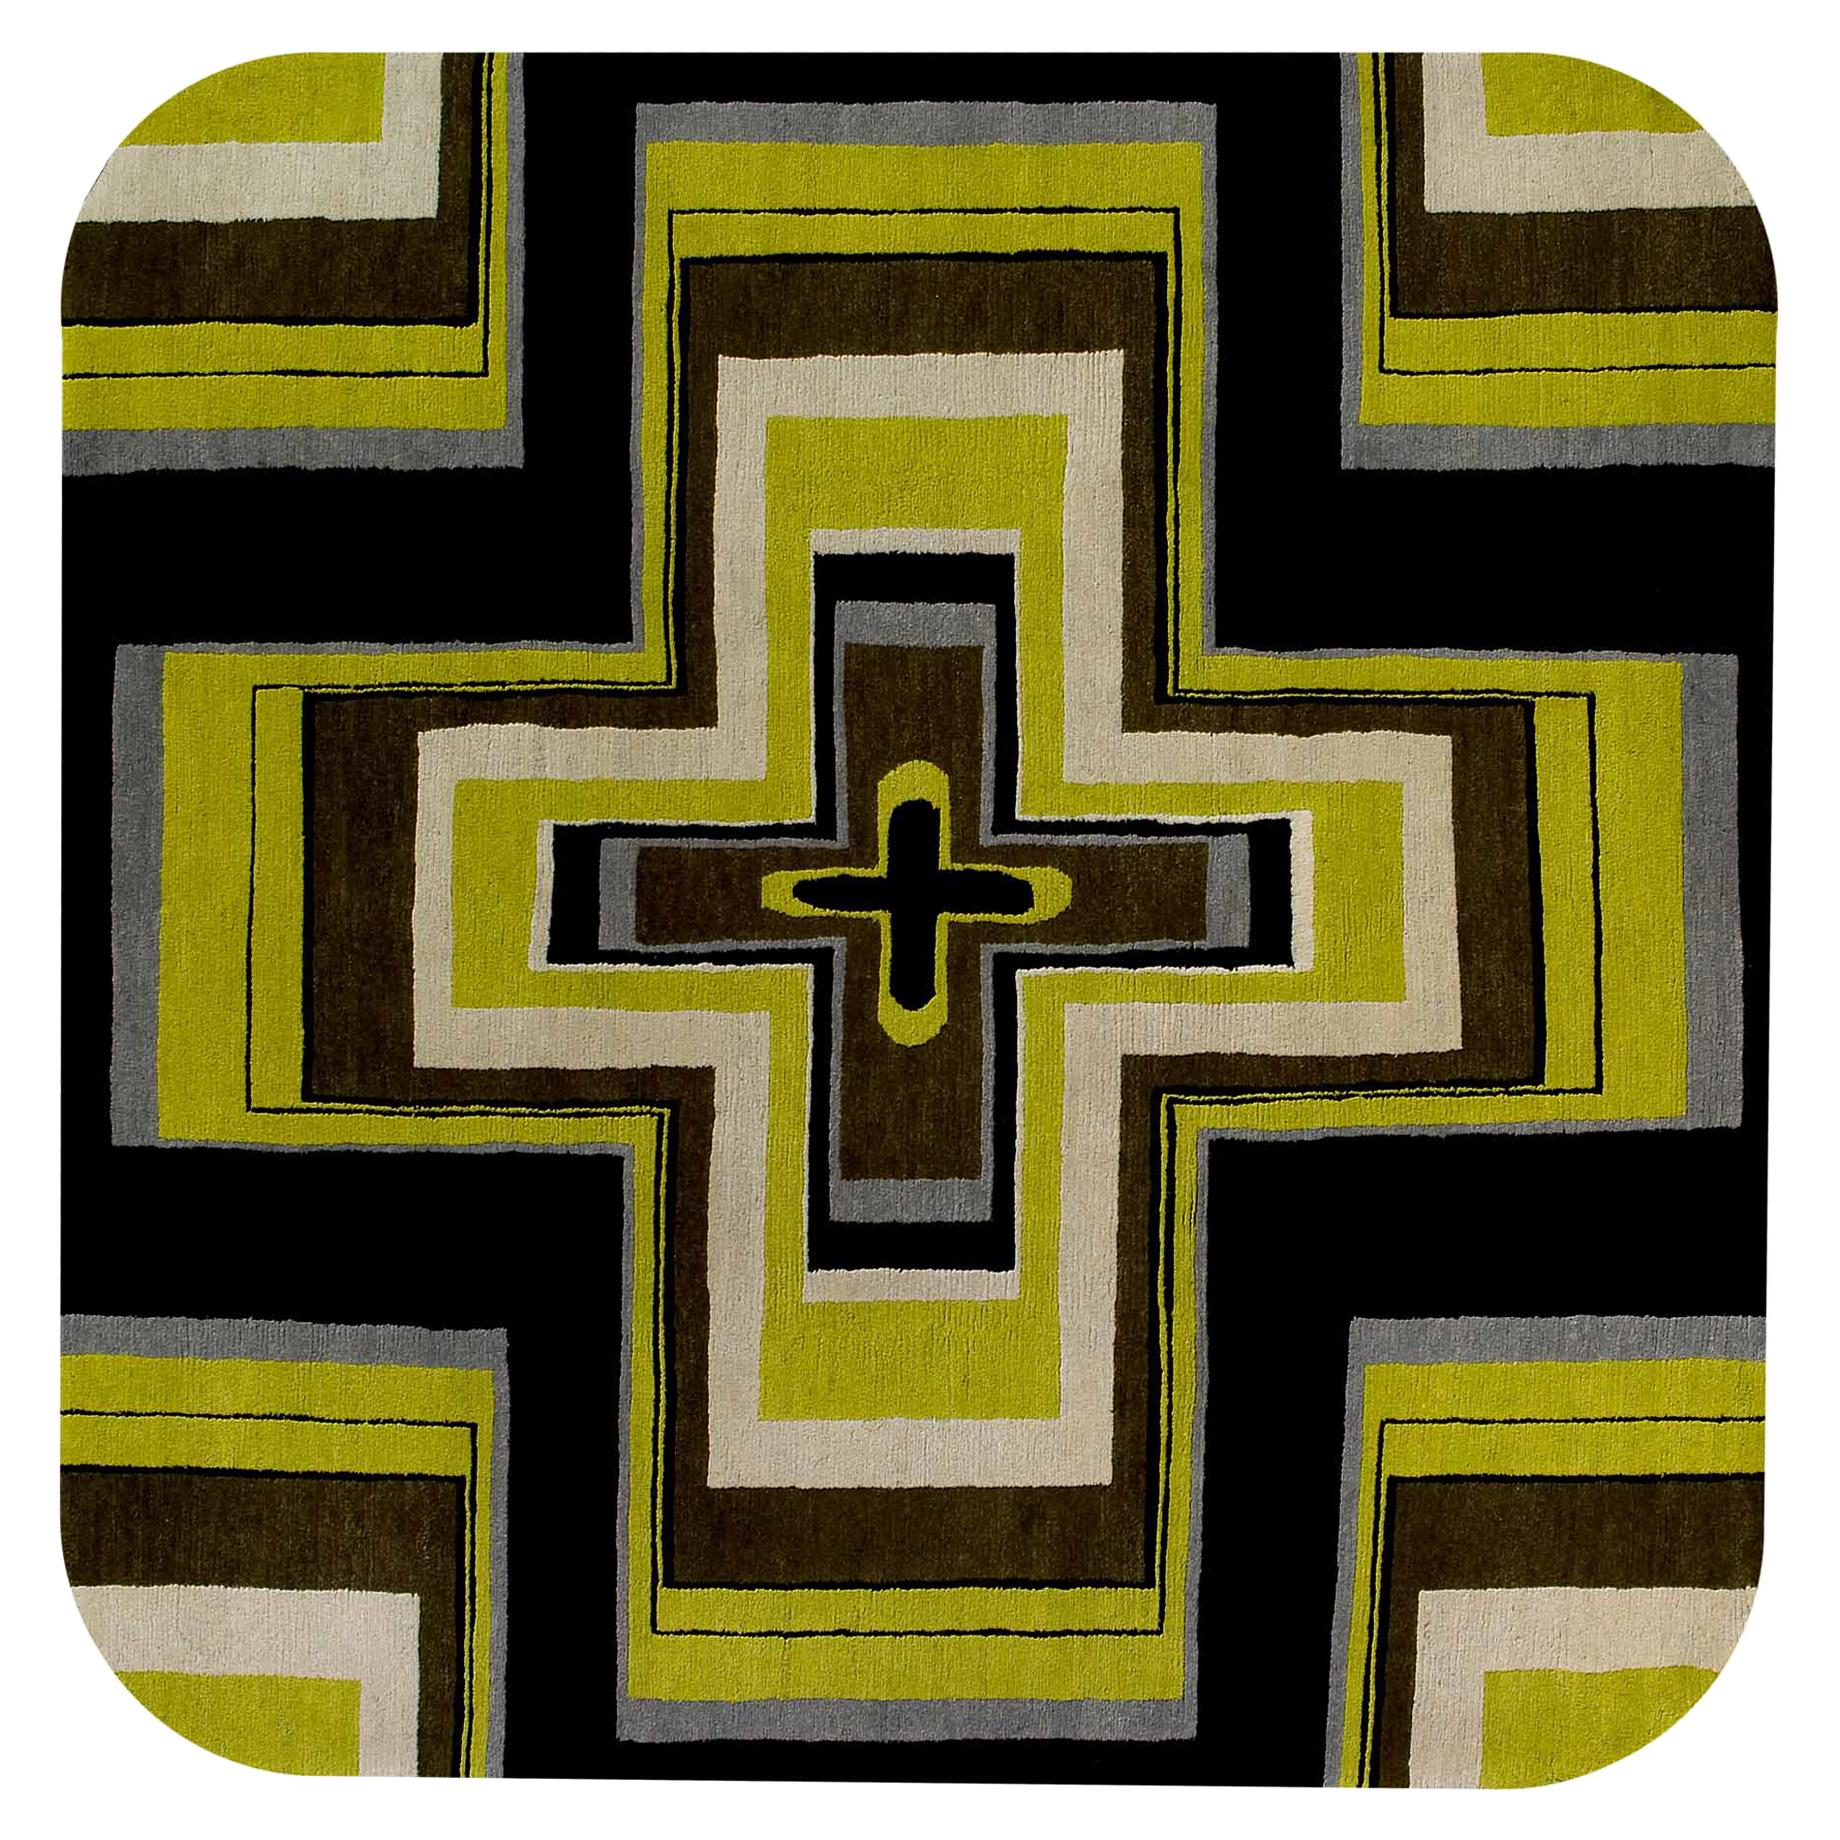 KR3 Woollen Carpet by Karim Rashid for Post Design Collection/Memphis